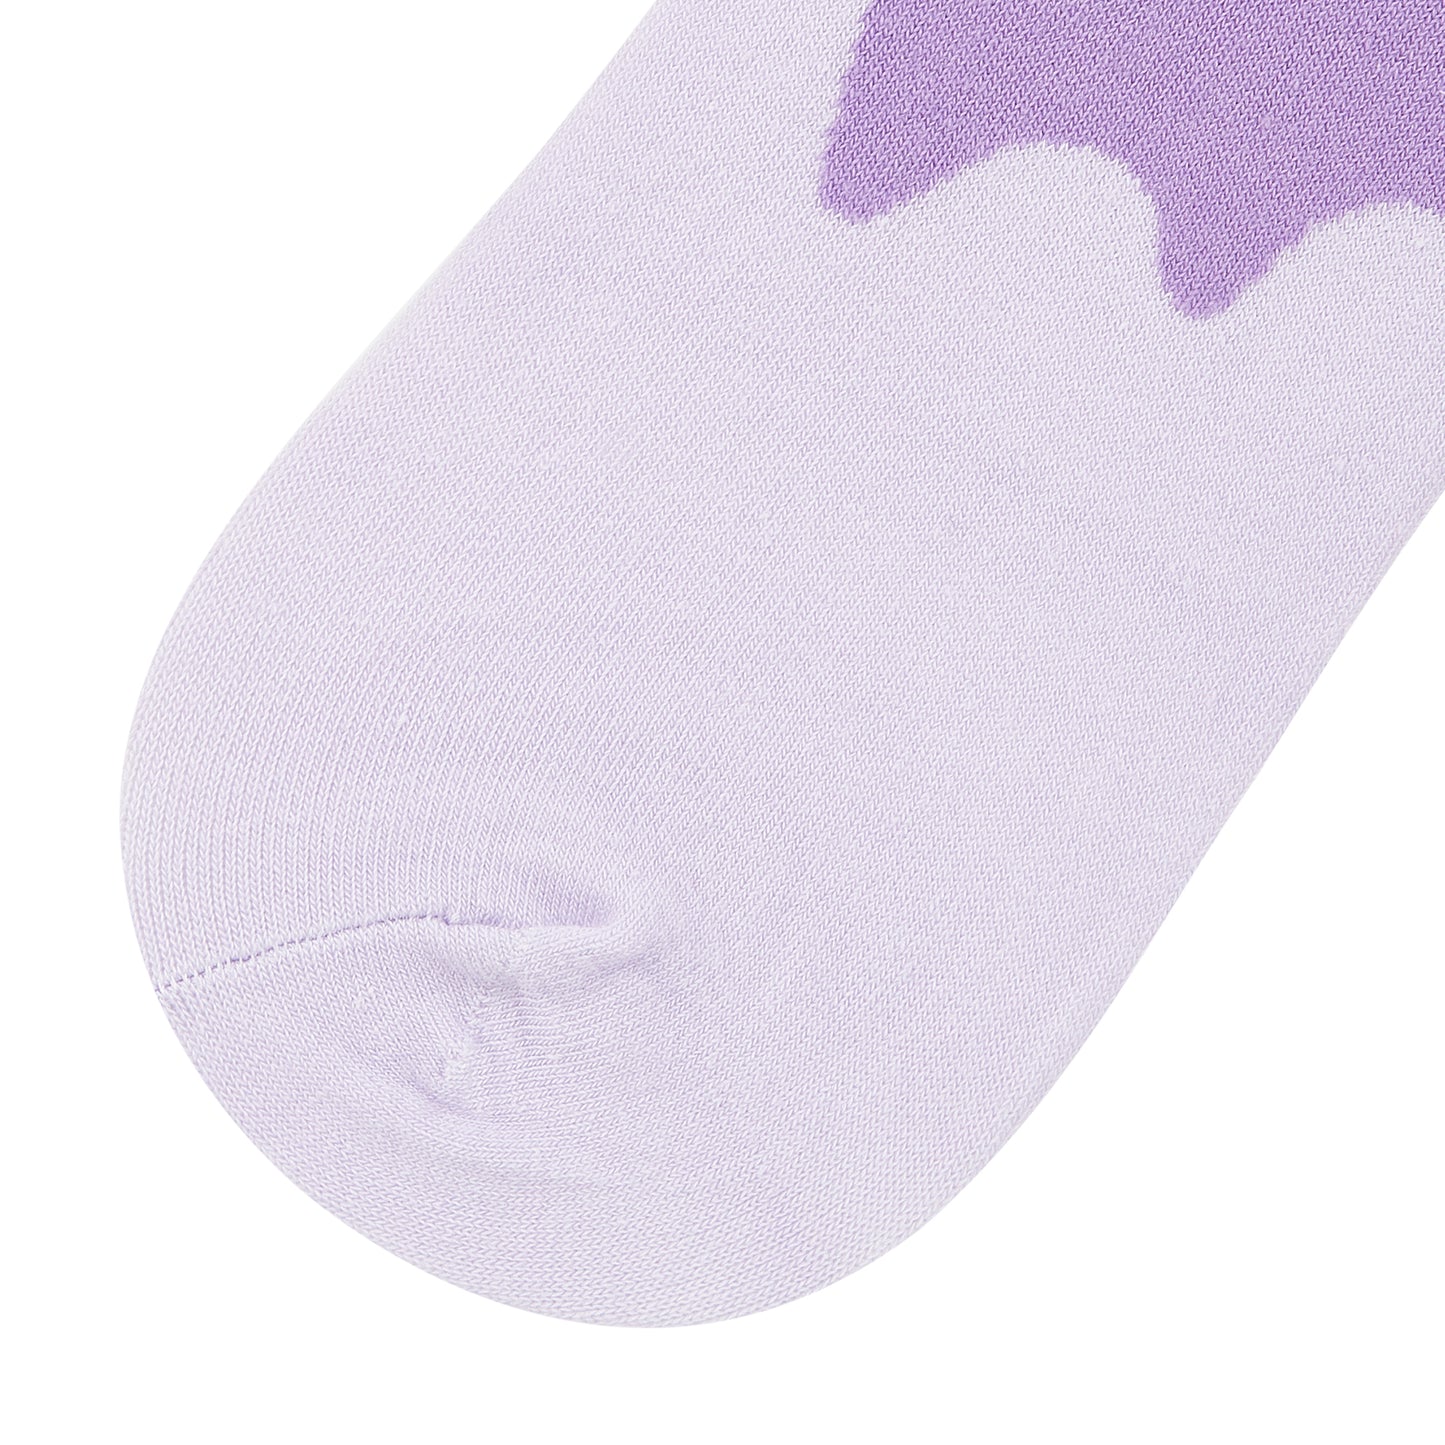 IDENTITY Ladies Gradient Paint Ankle Length Socks - IDENTITY Apparel Shop